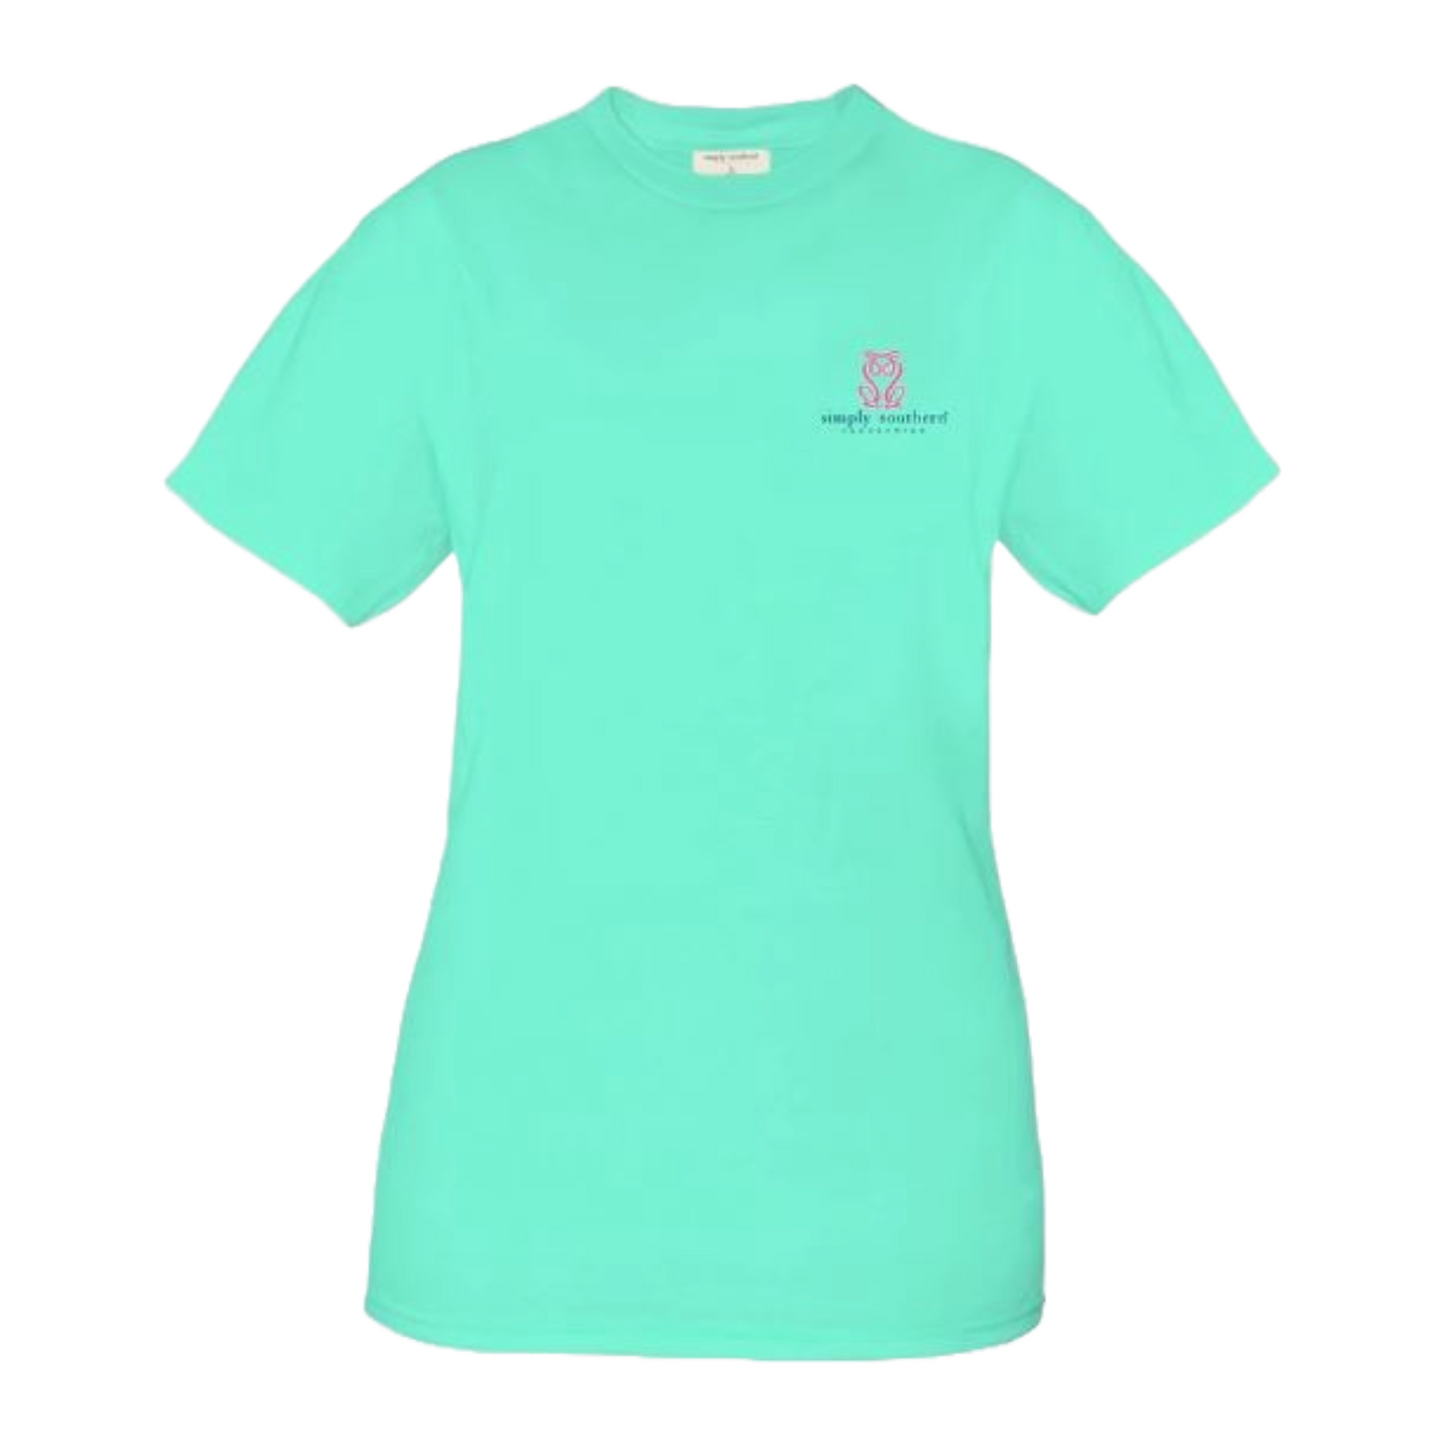 Simply Southern Ladies Big Dill Sea Green Short Sleeve T-Shirt SS-BIGDILL-SEA